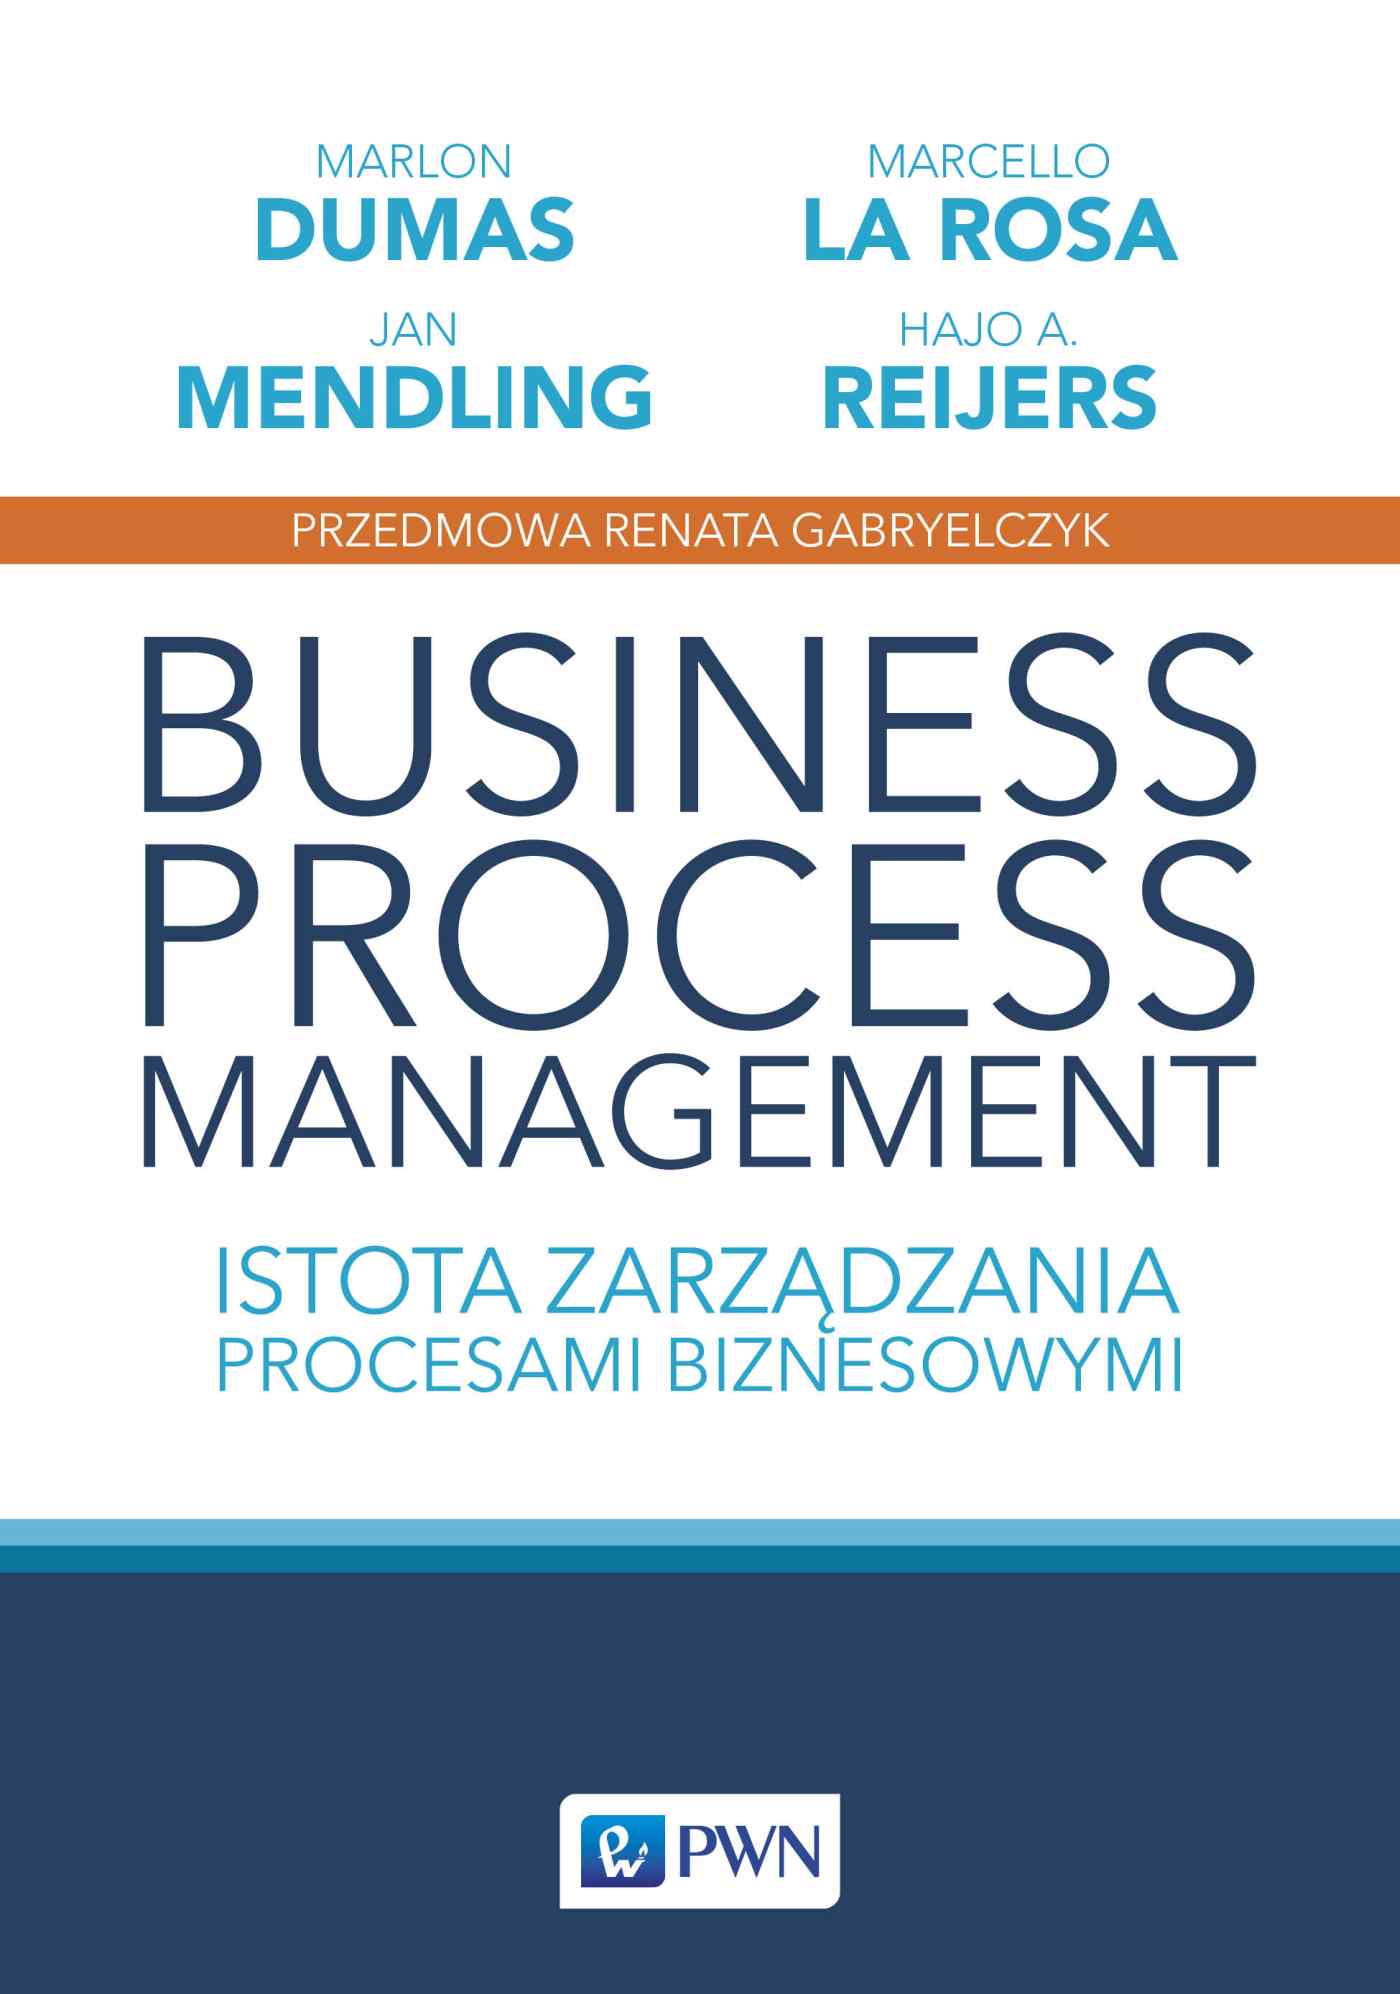 Book Business process management Reijers Hajo A.